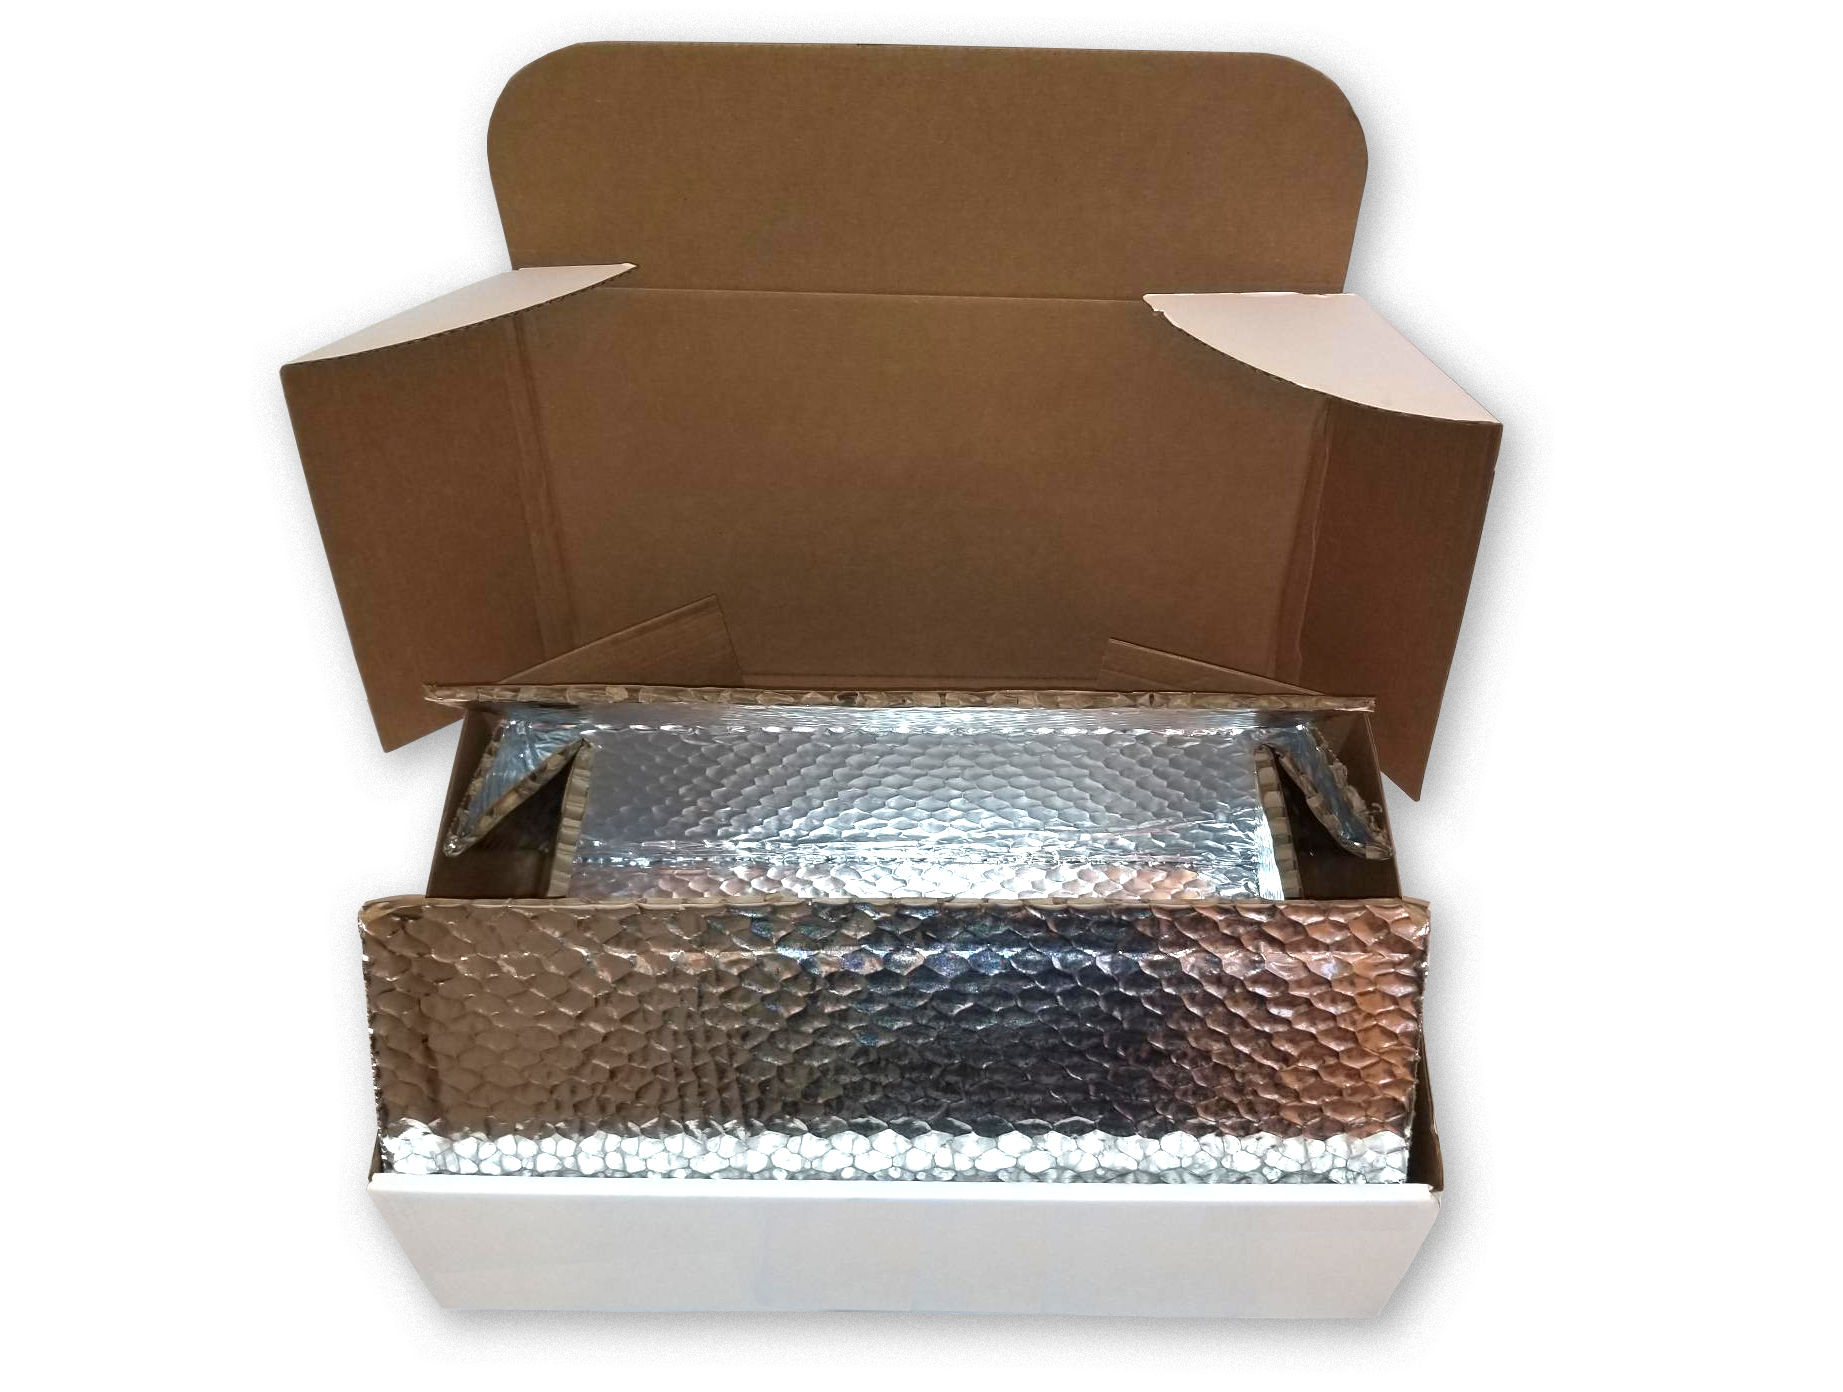 Standard Insulated Box - eutecma